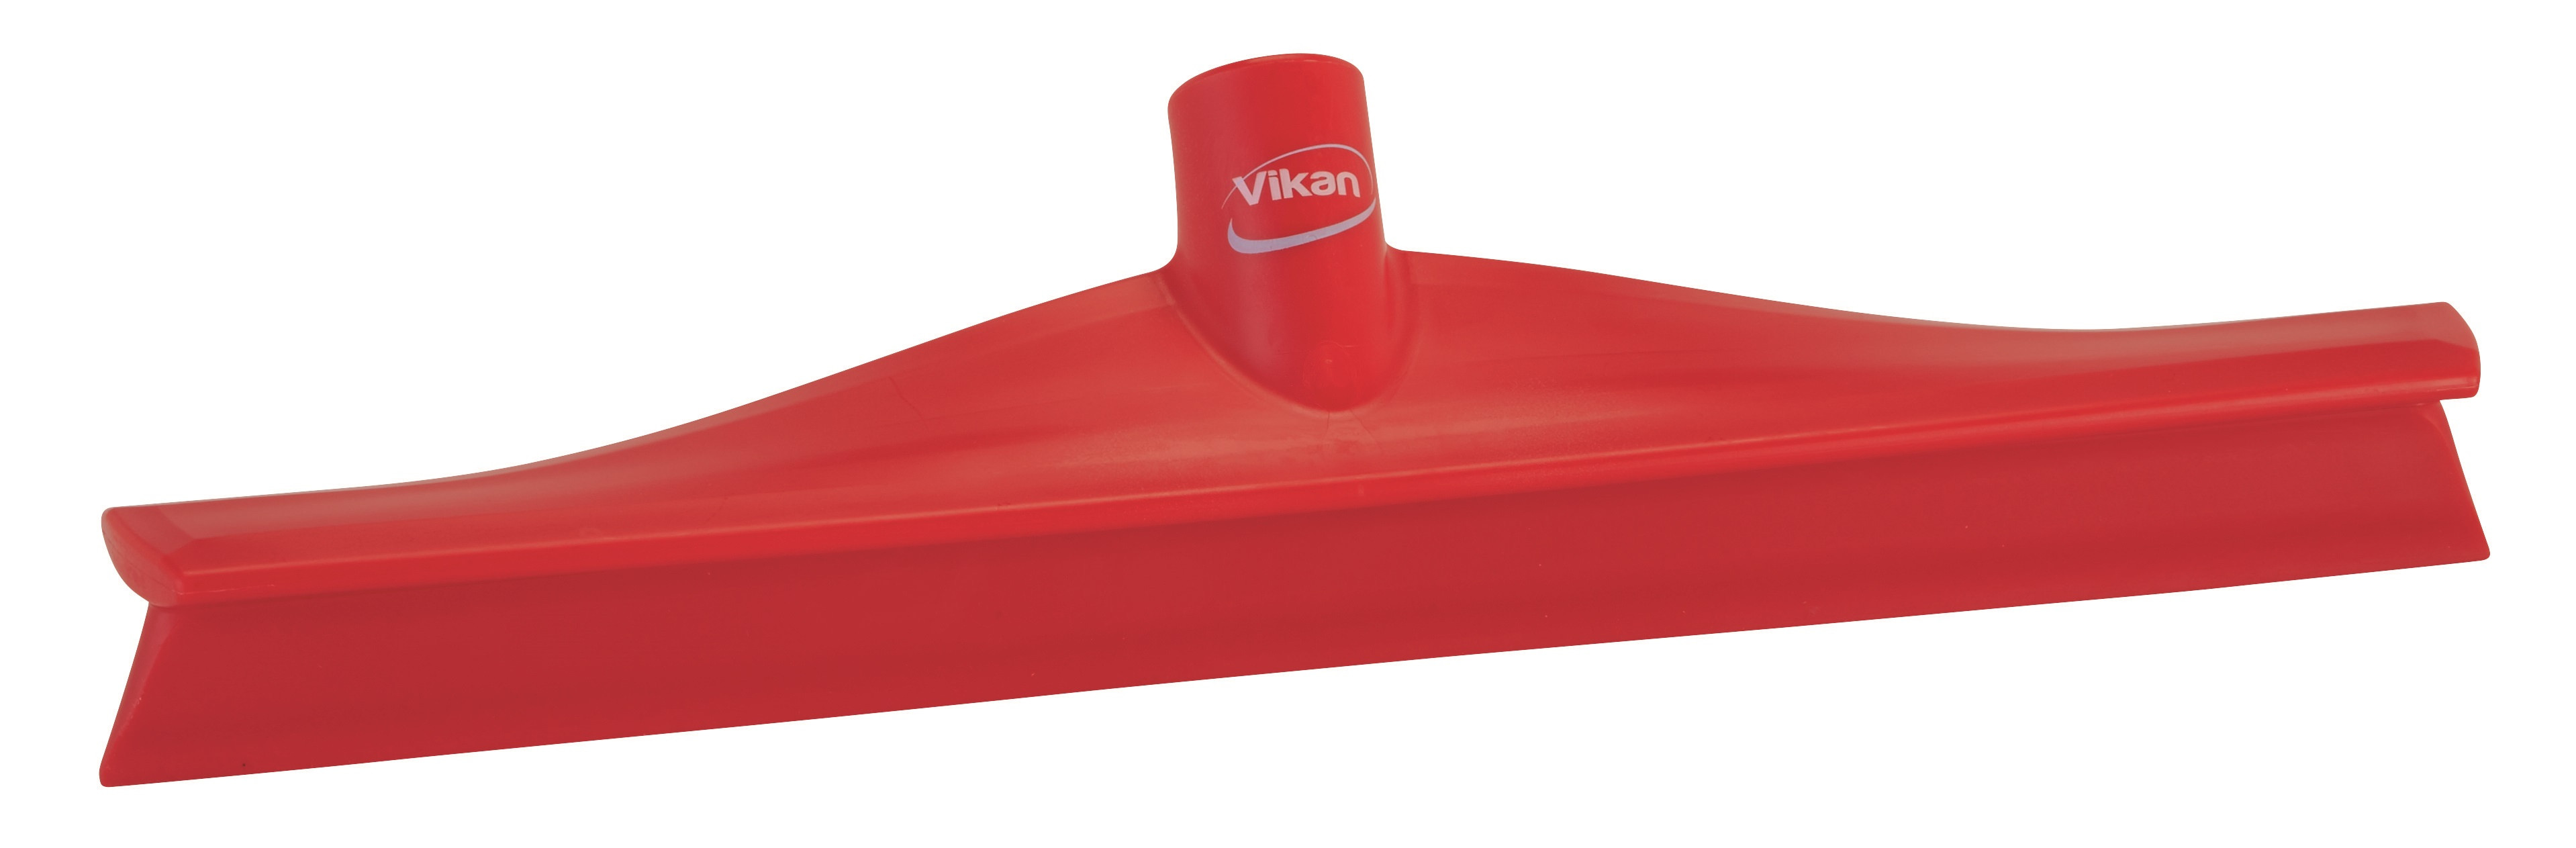 Vikan Skraber Ultra hygiejnisk 400 mm Rød Enkeltlæbe (71404)